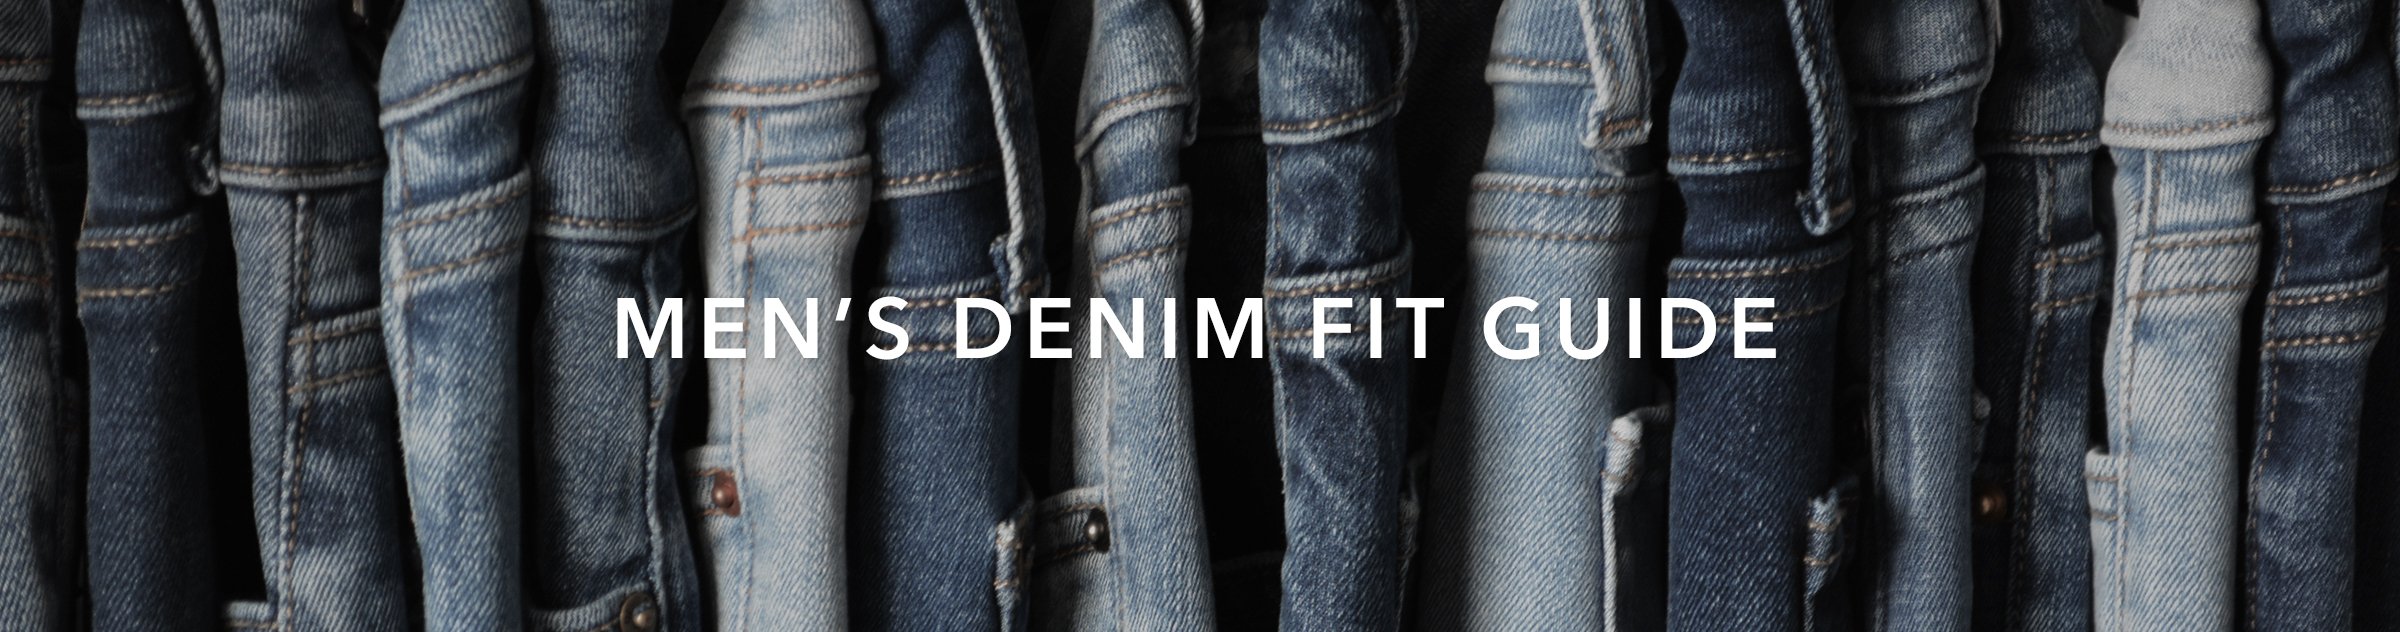 top 10 mens jeans brands